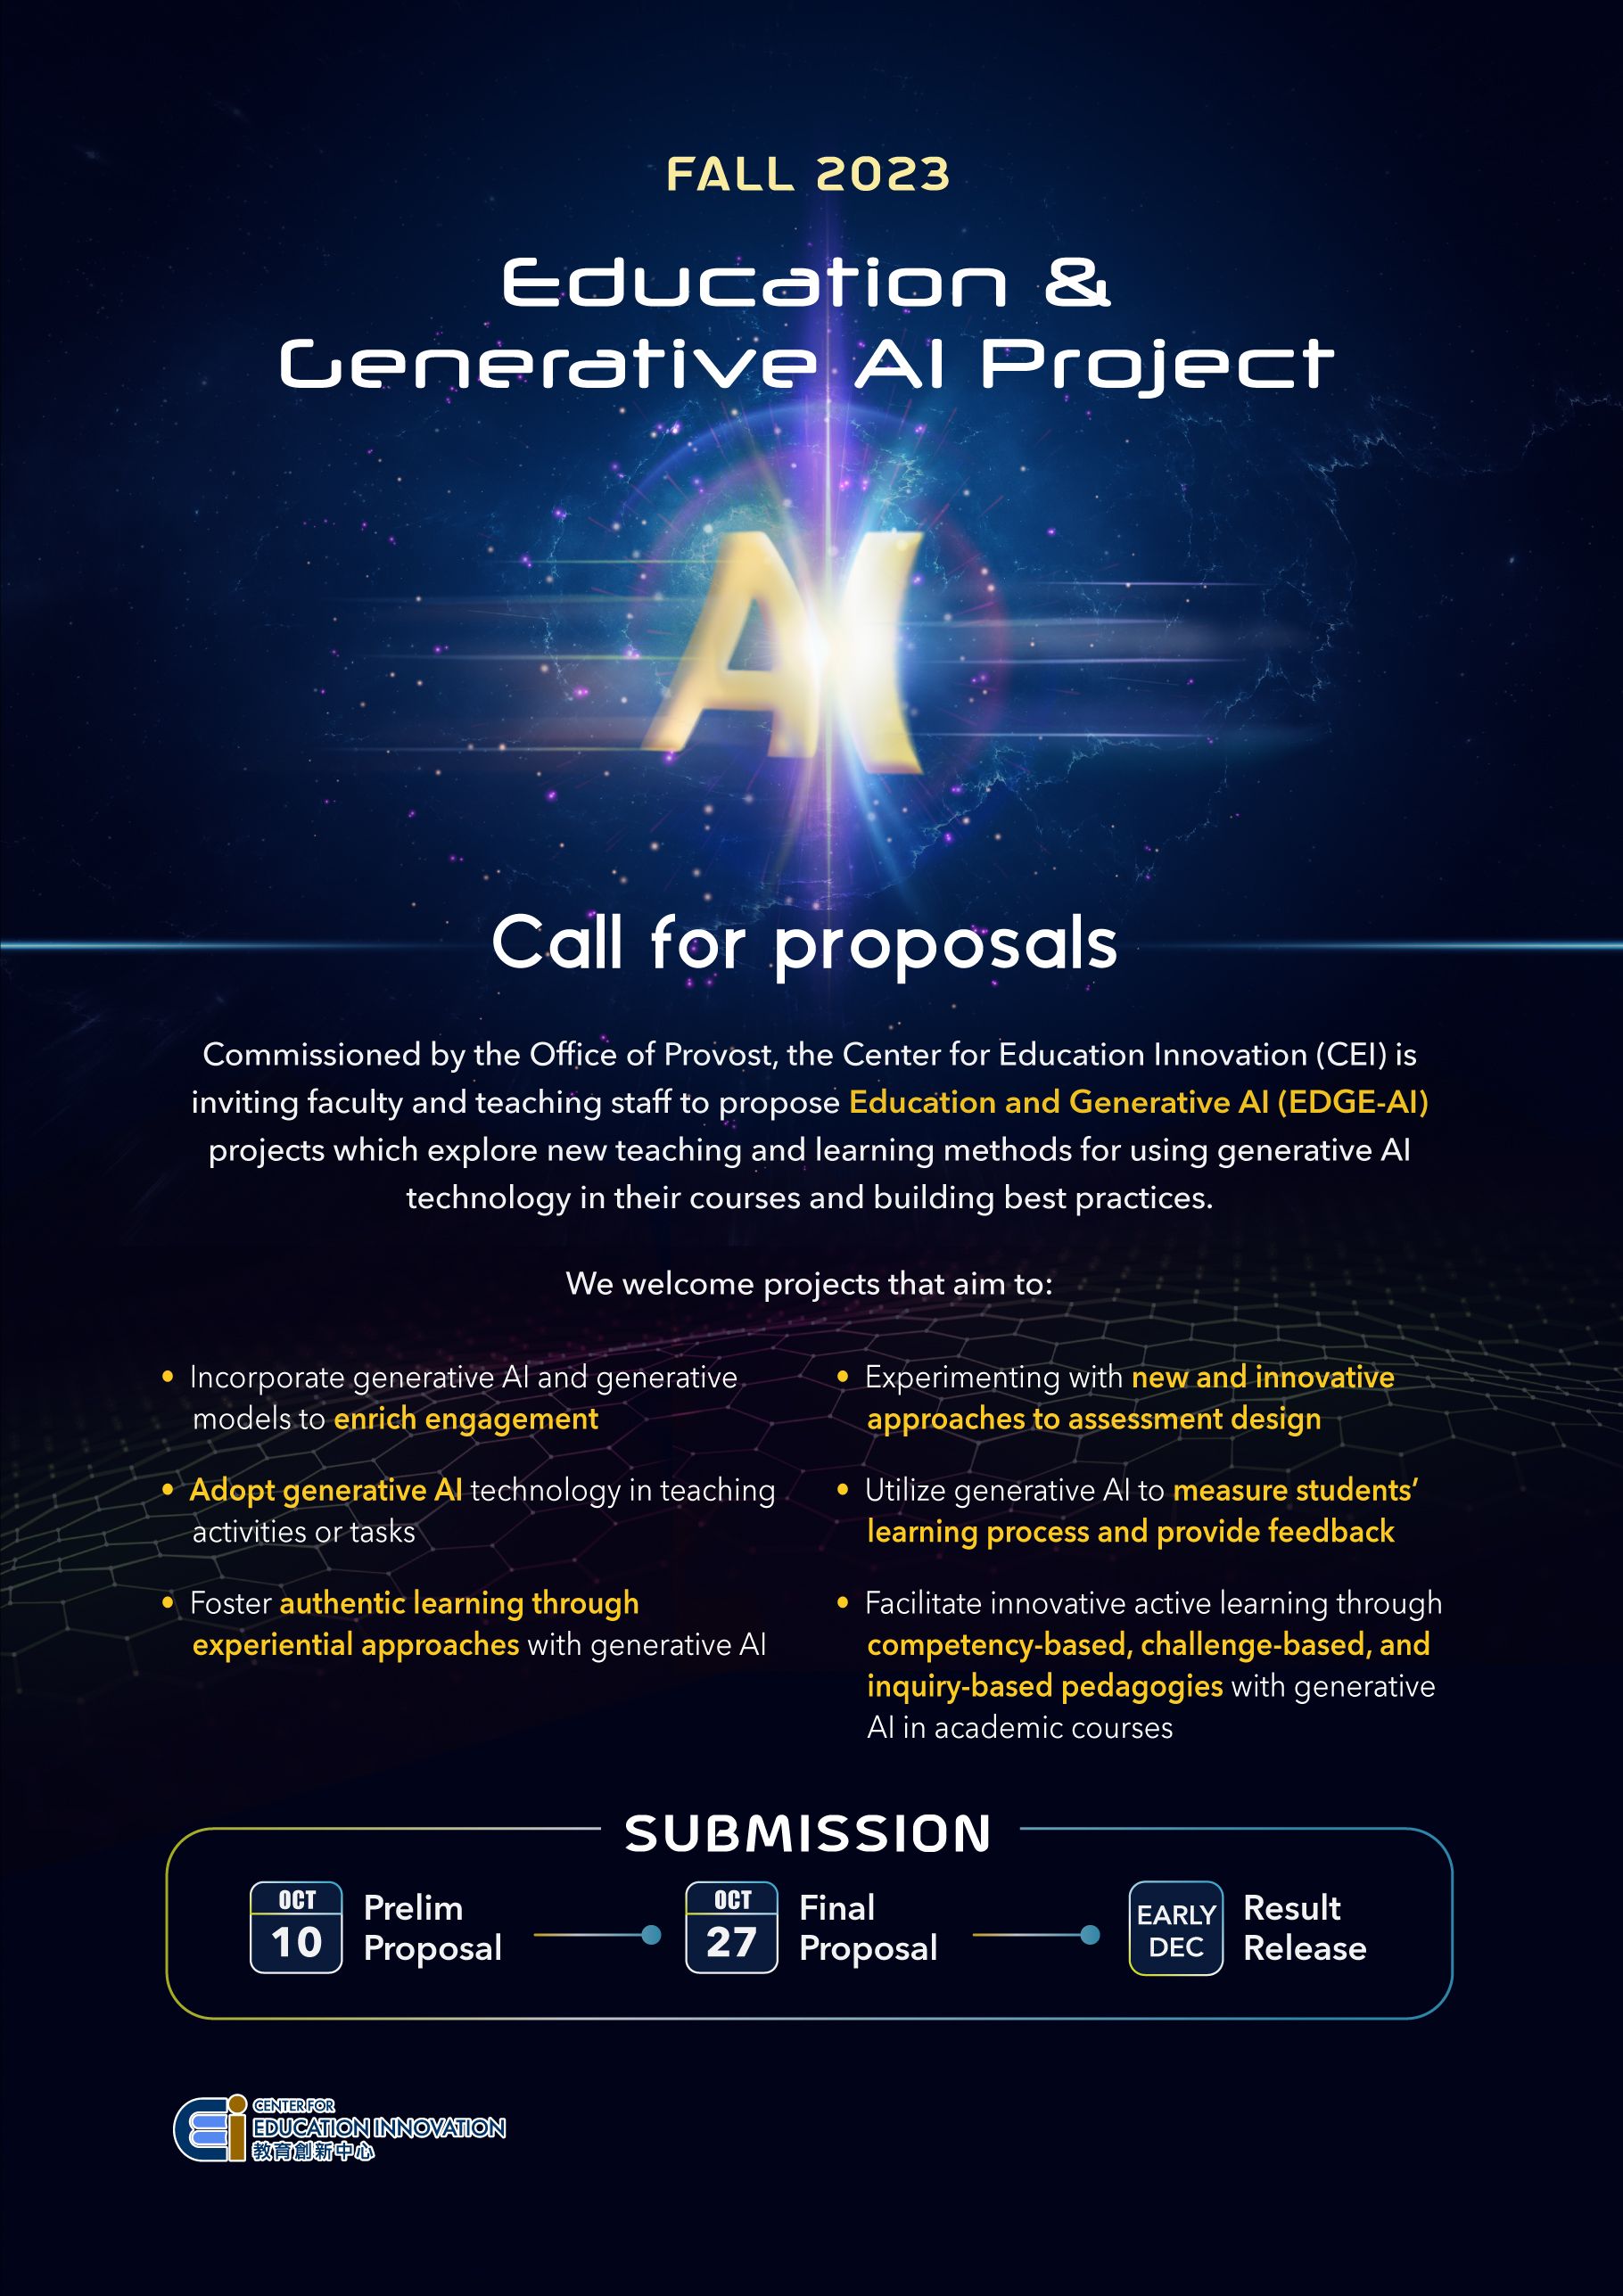 Education &Generative AI Project | Call for paroposals | FALL 2023